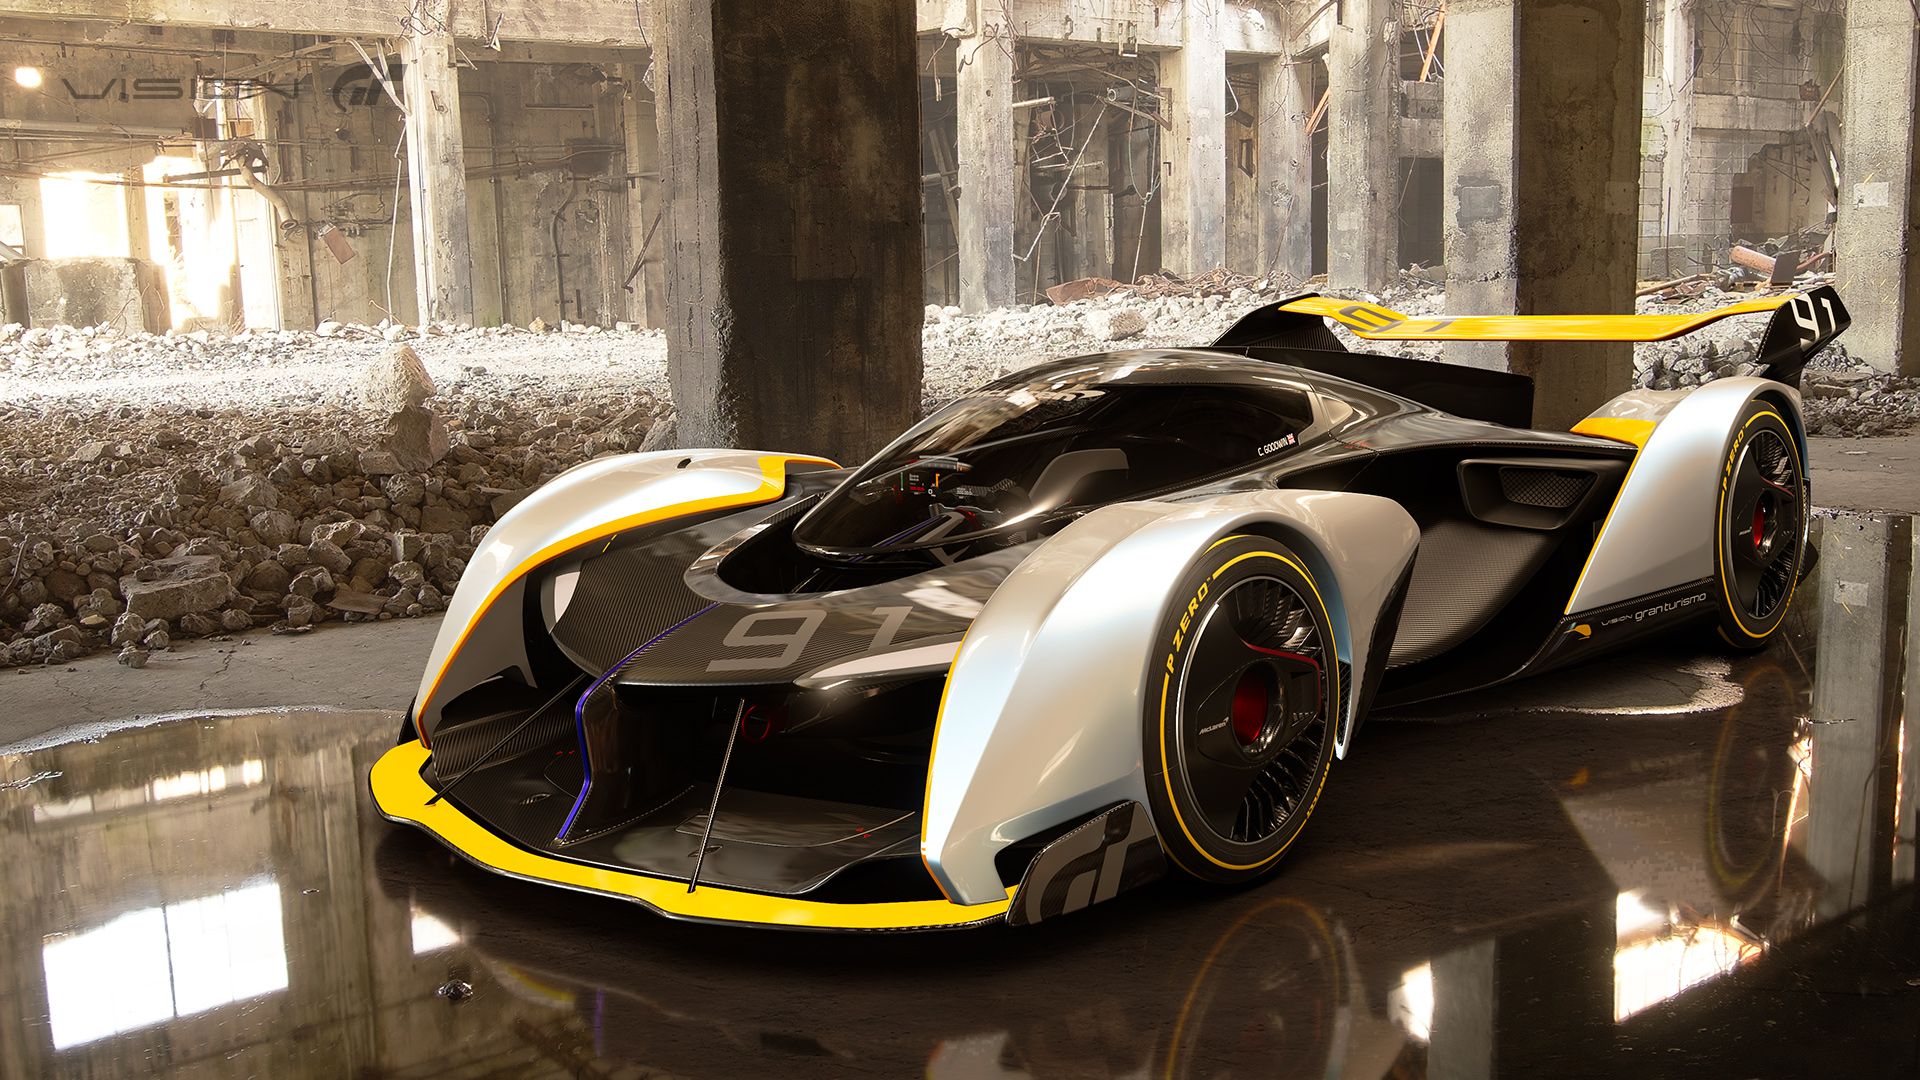 Presenting an image of a Sportscar beyond 2030. McLaren reveals their Ultimate McLaren Vision Gran Turismo